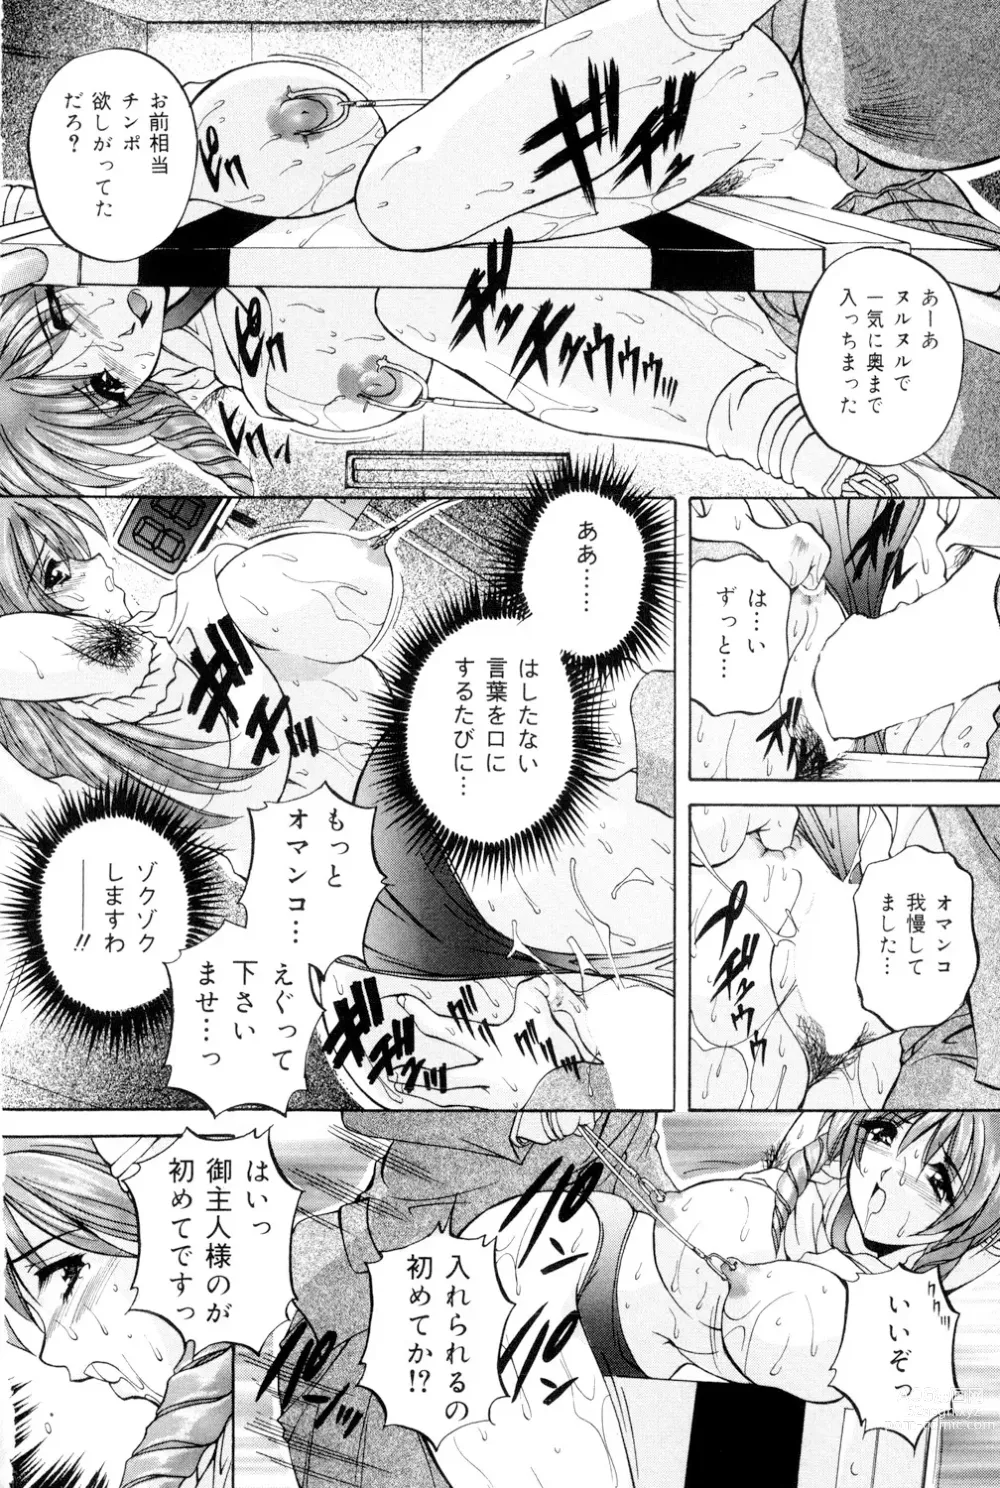 Page 165 of manga Aniyome no Himitsu